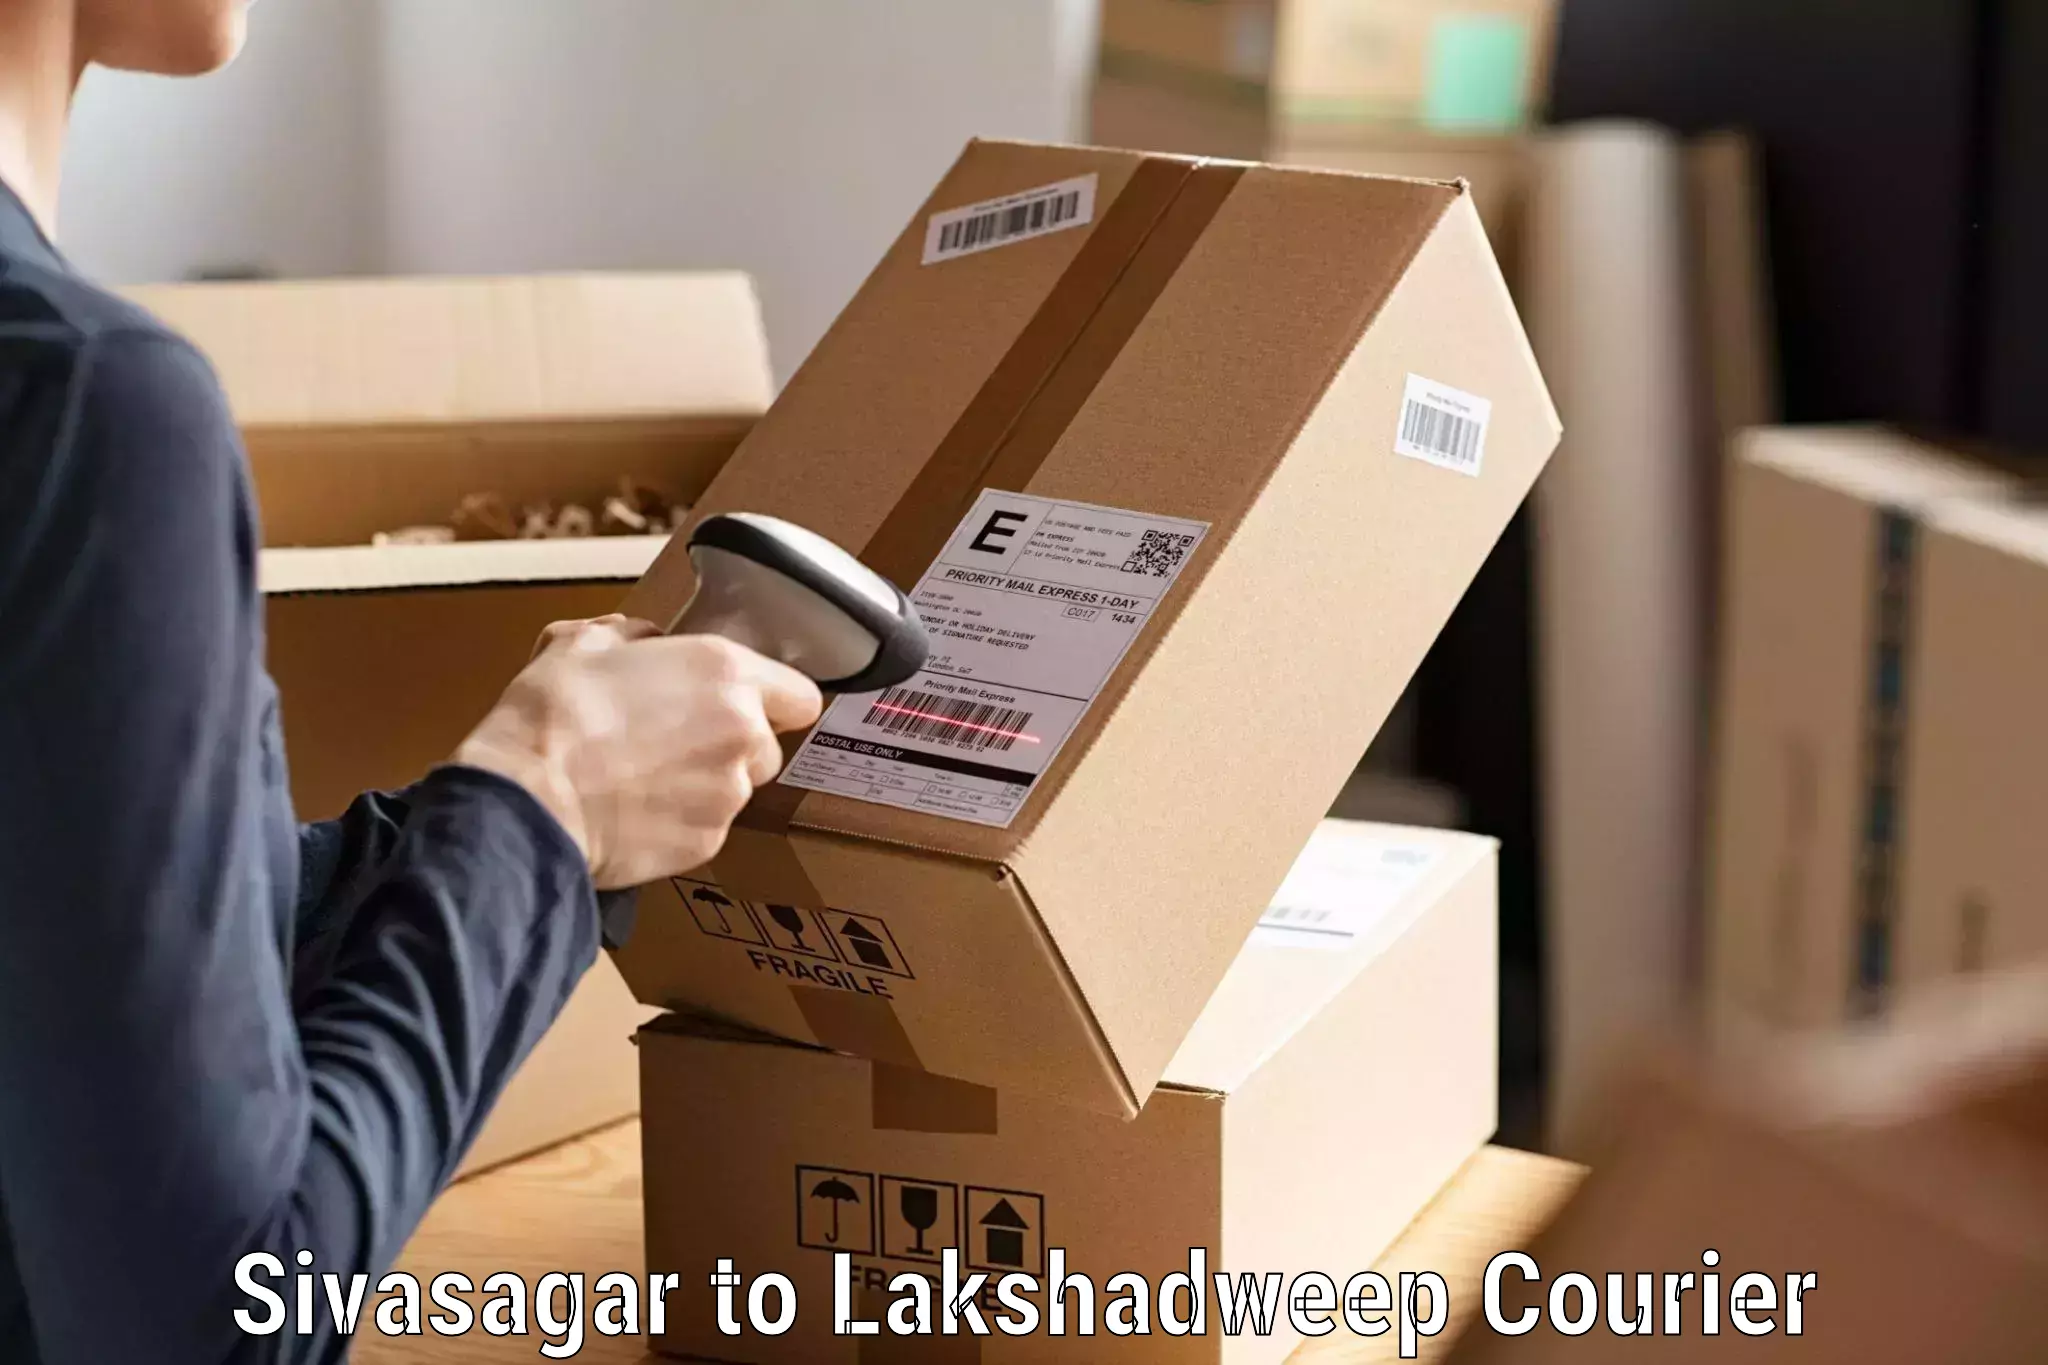 Professional courier handling Sivasagar to Lakshadweep